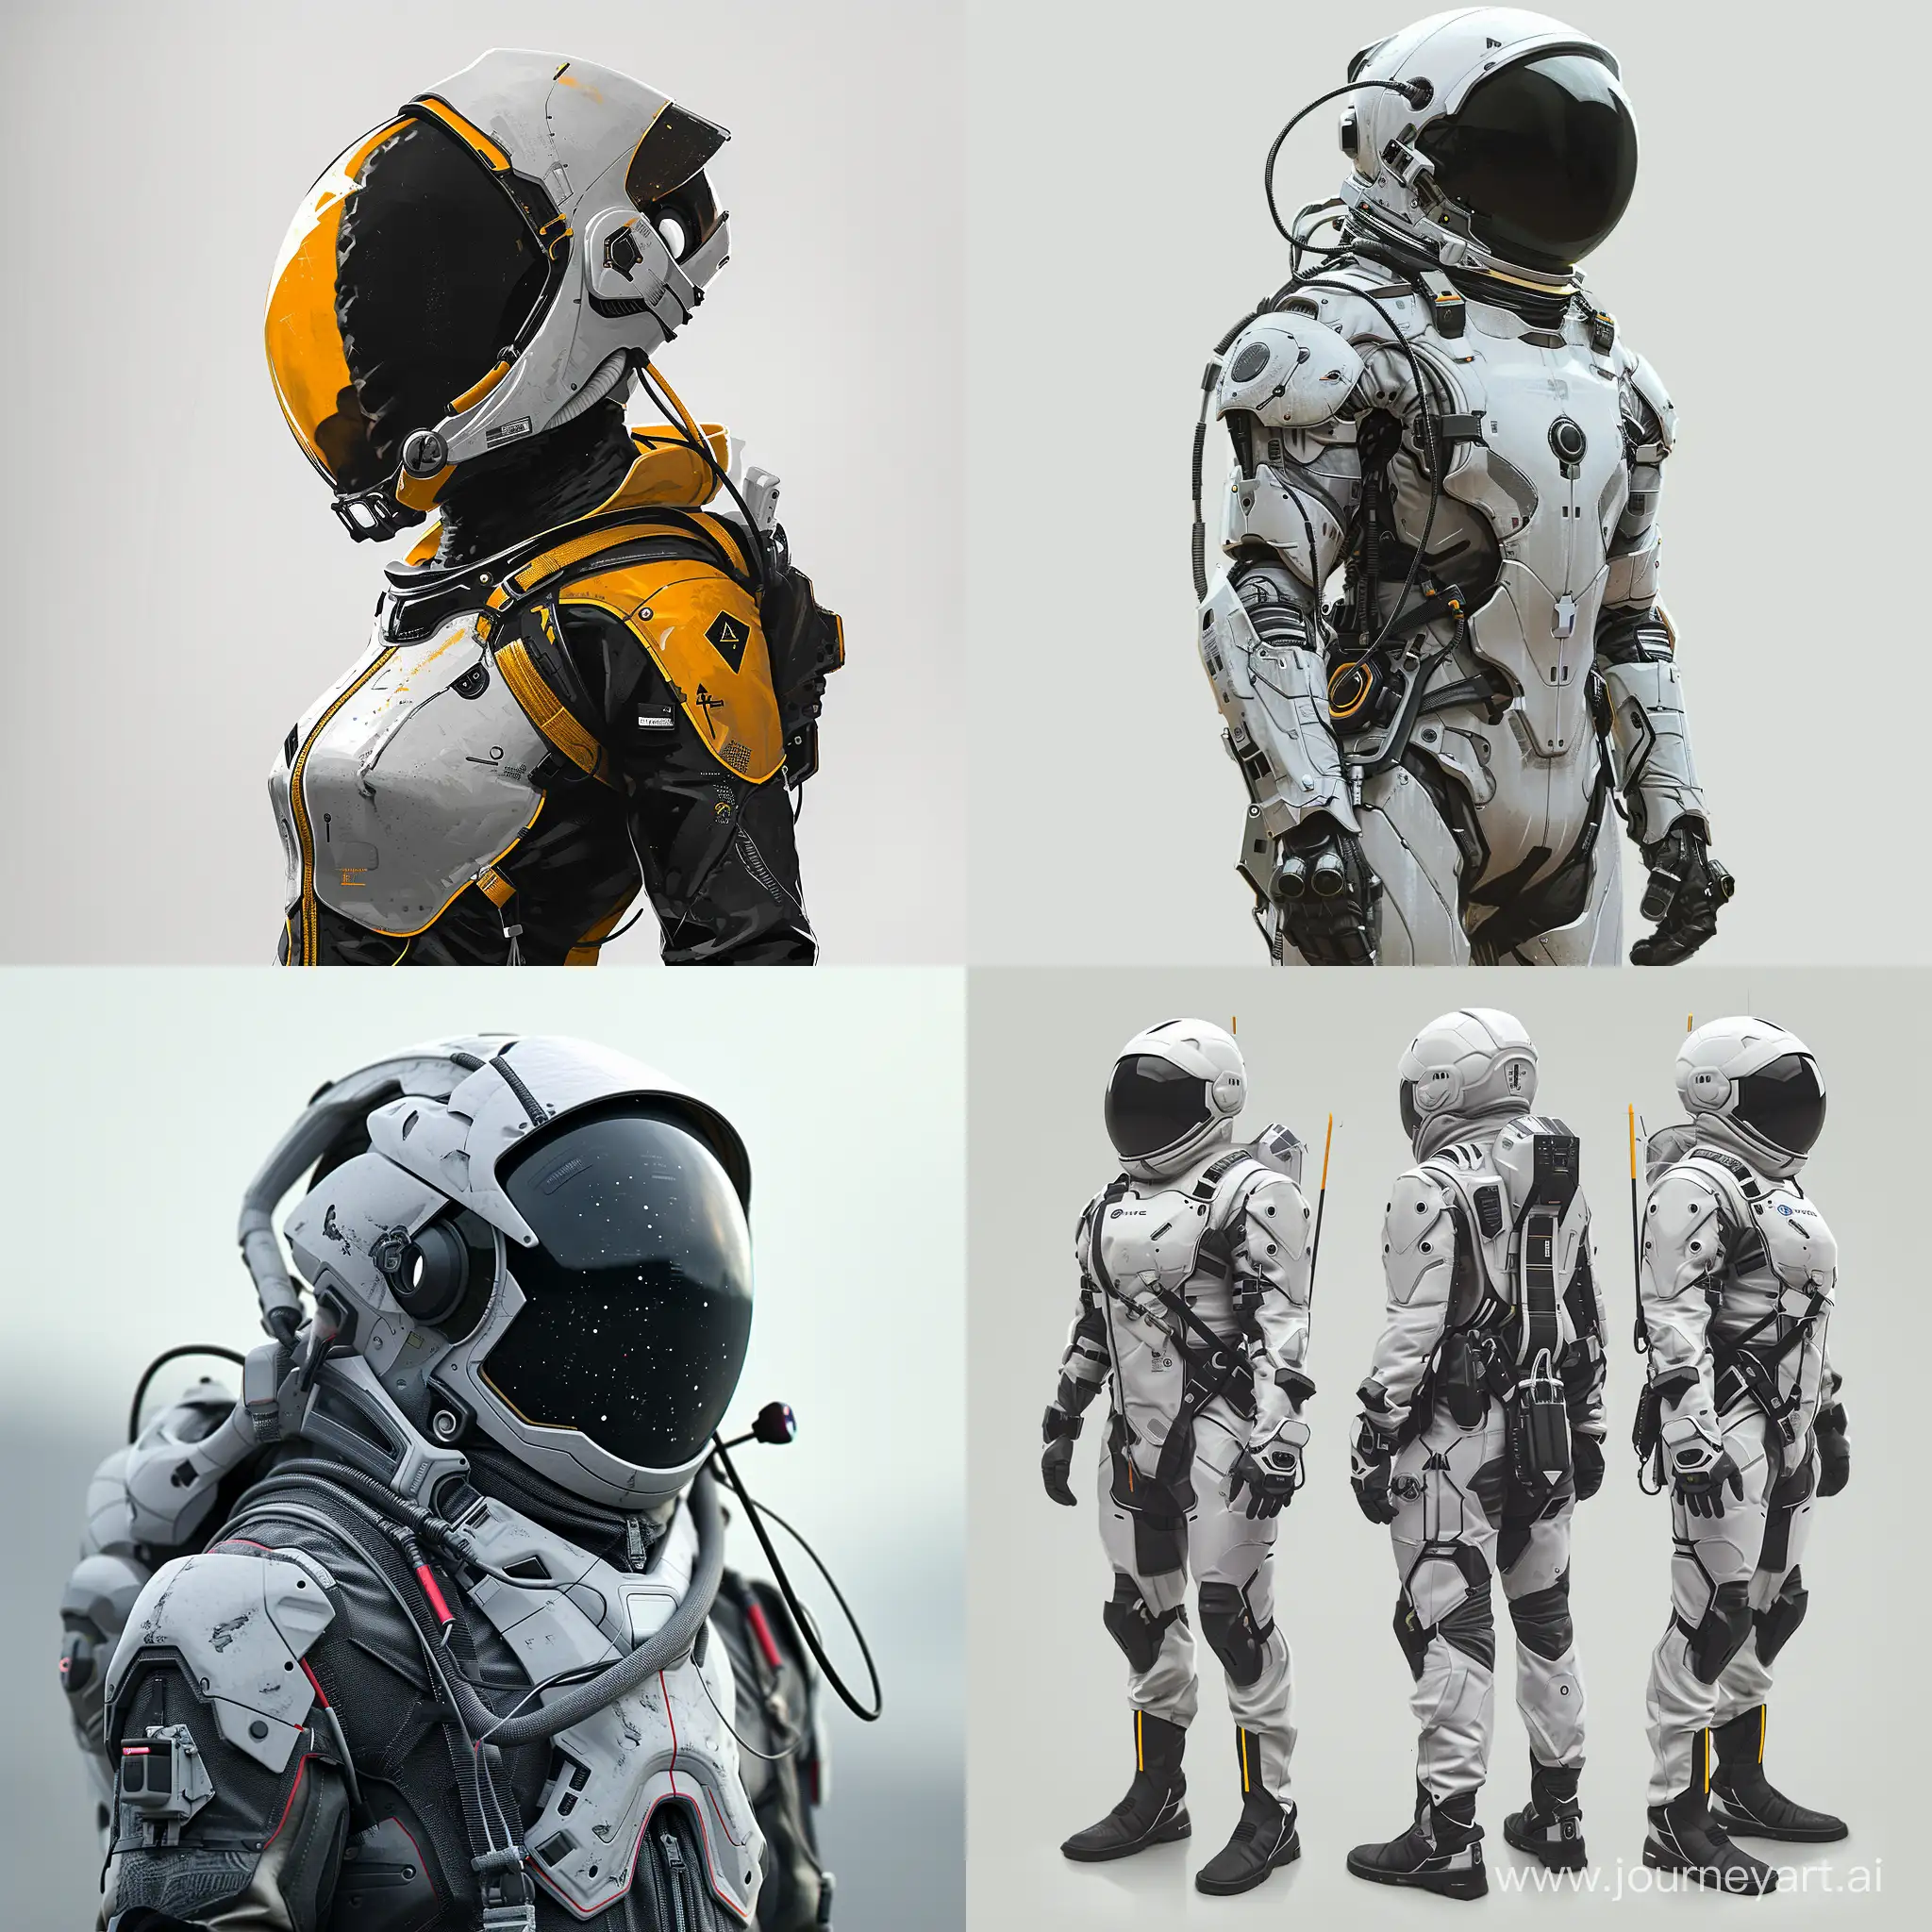 Futuristic-Space-Suit-Art-for-ArtStation-and-DeviantArt